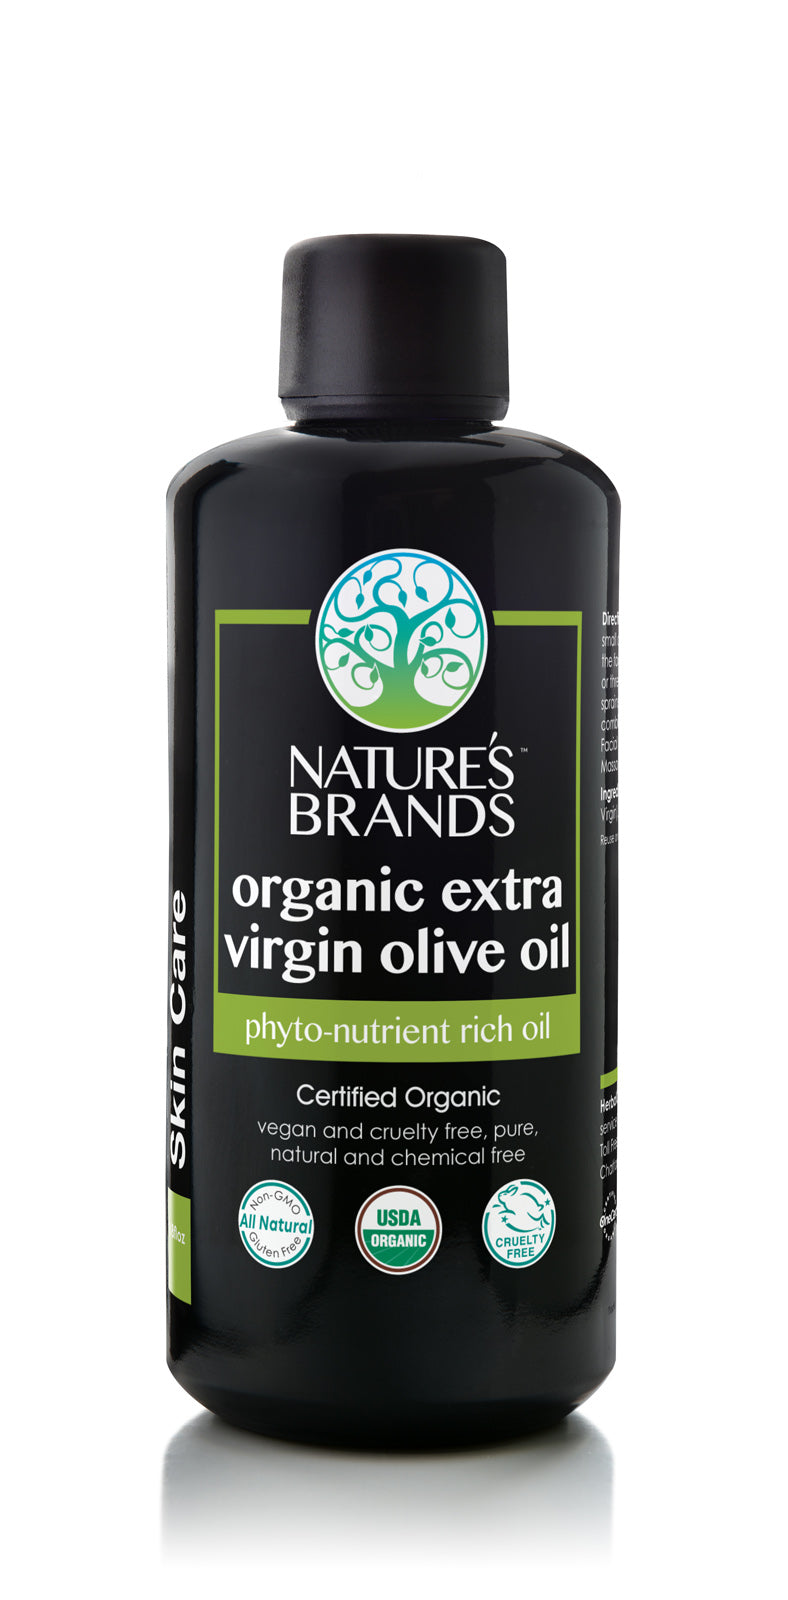 Organic Extra Virgin Olive Oil Spray, 5 fl oz at Whole Foods Market